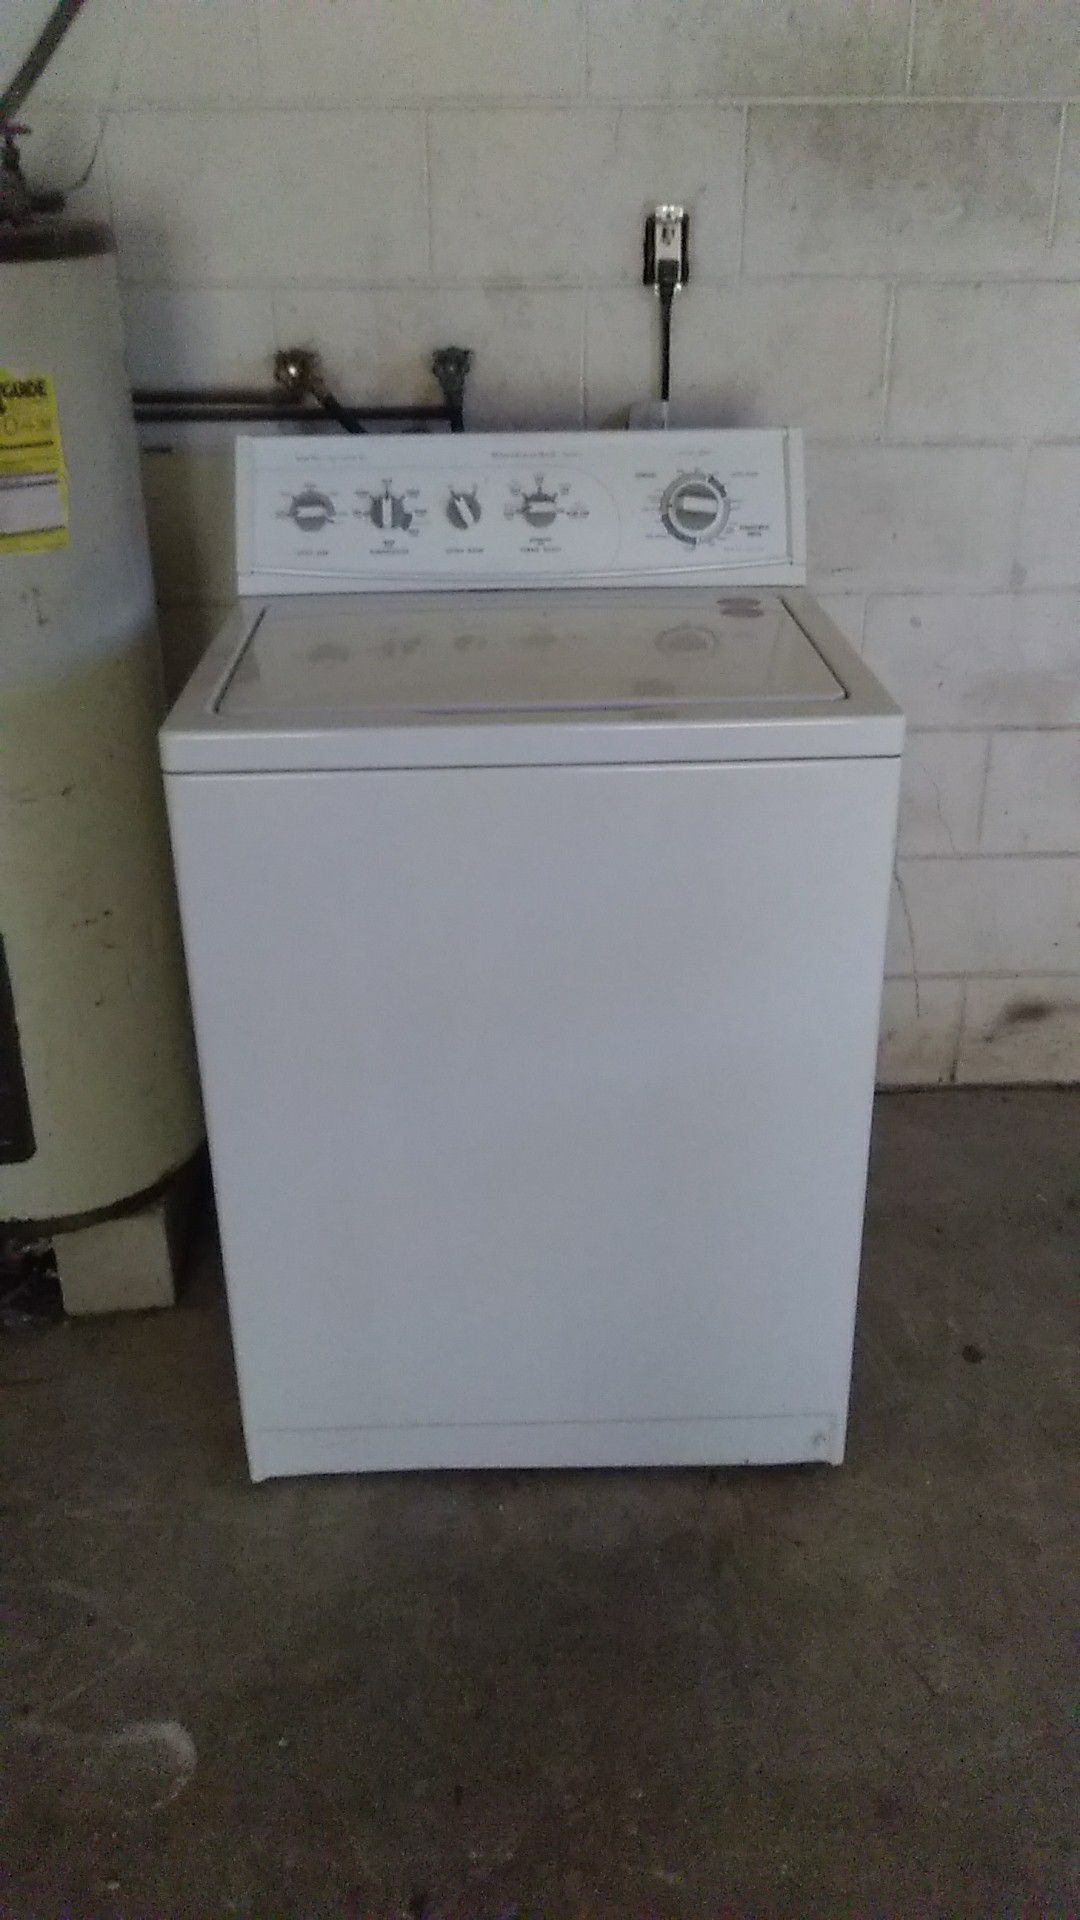 KitchenAid Superba heavy duty super capacity Plus washing machine for sale in Pine Hills works like new very nice machine